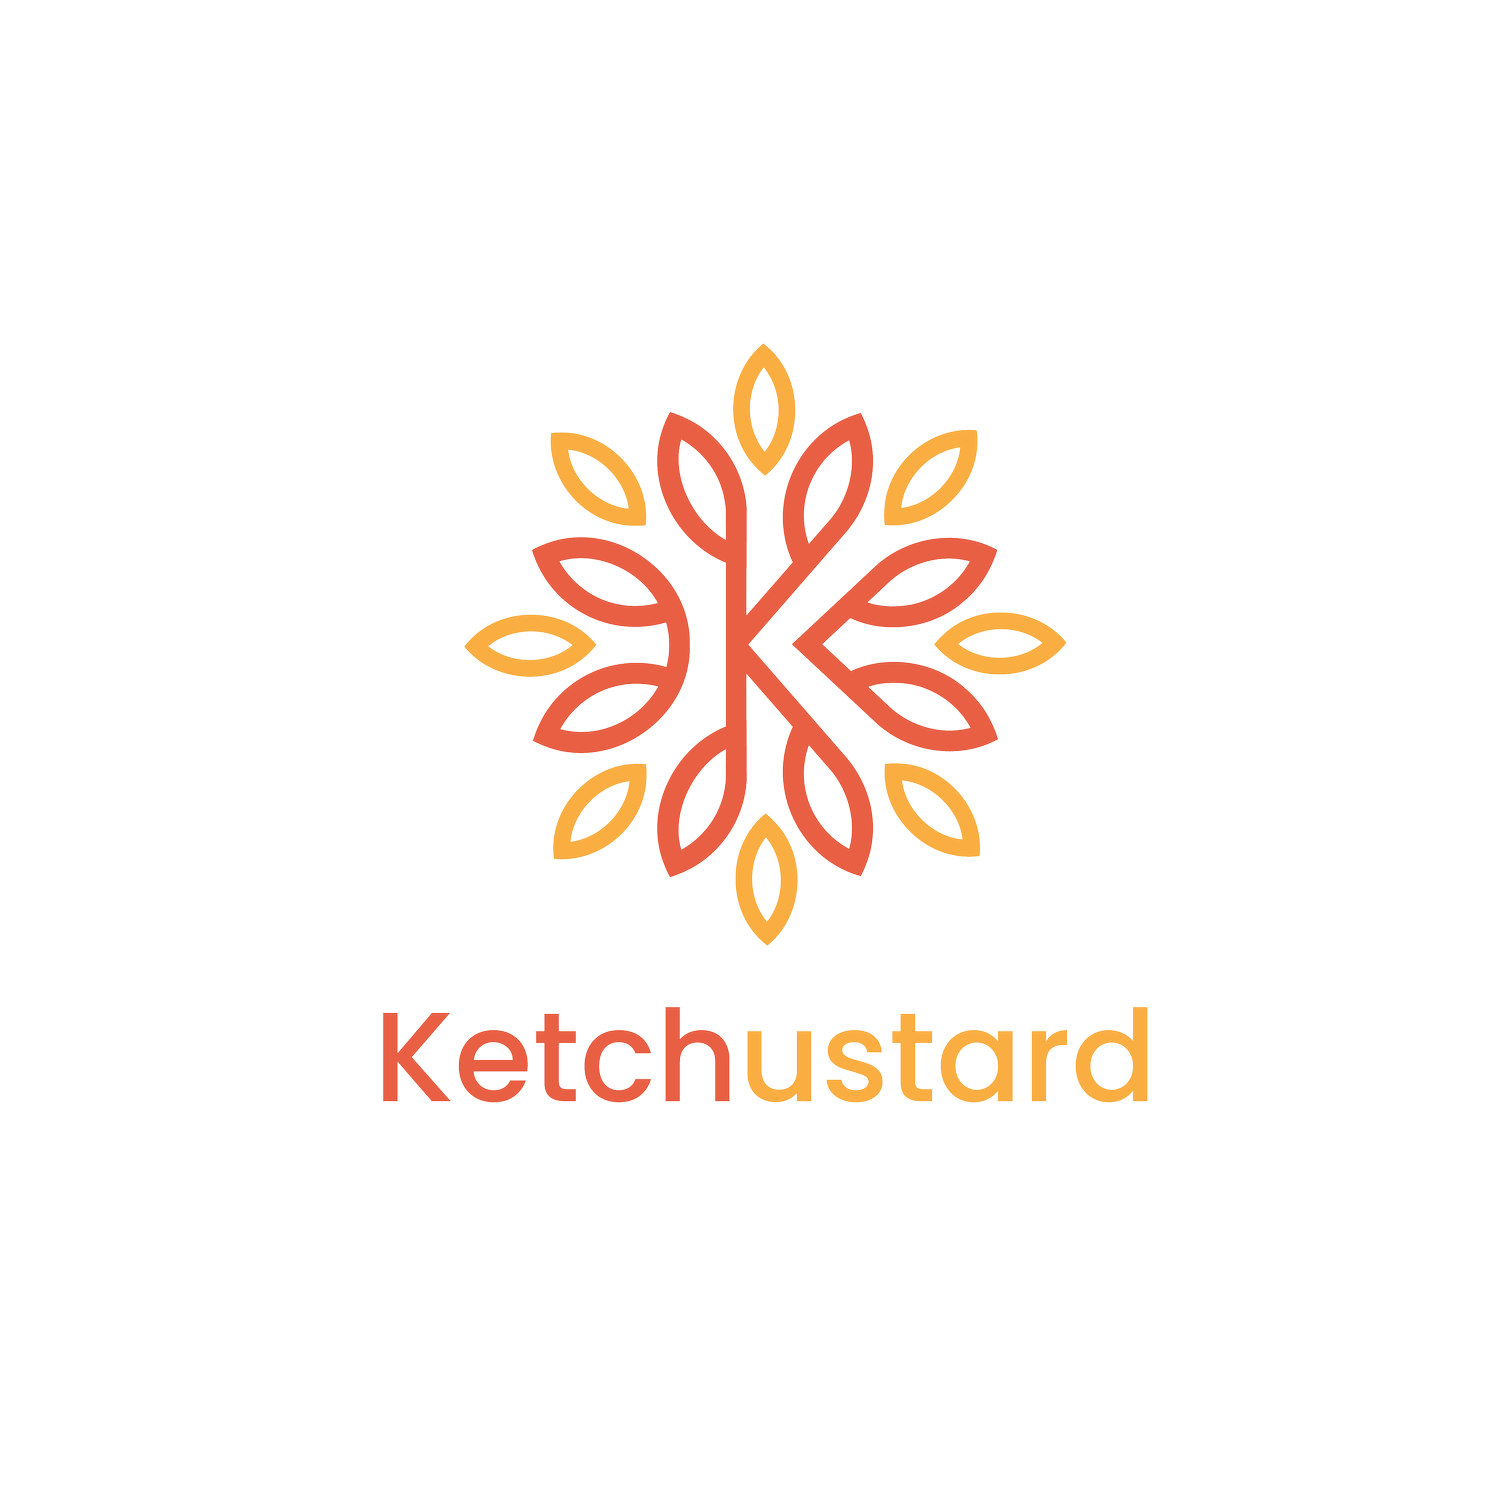 Ketchustard